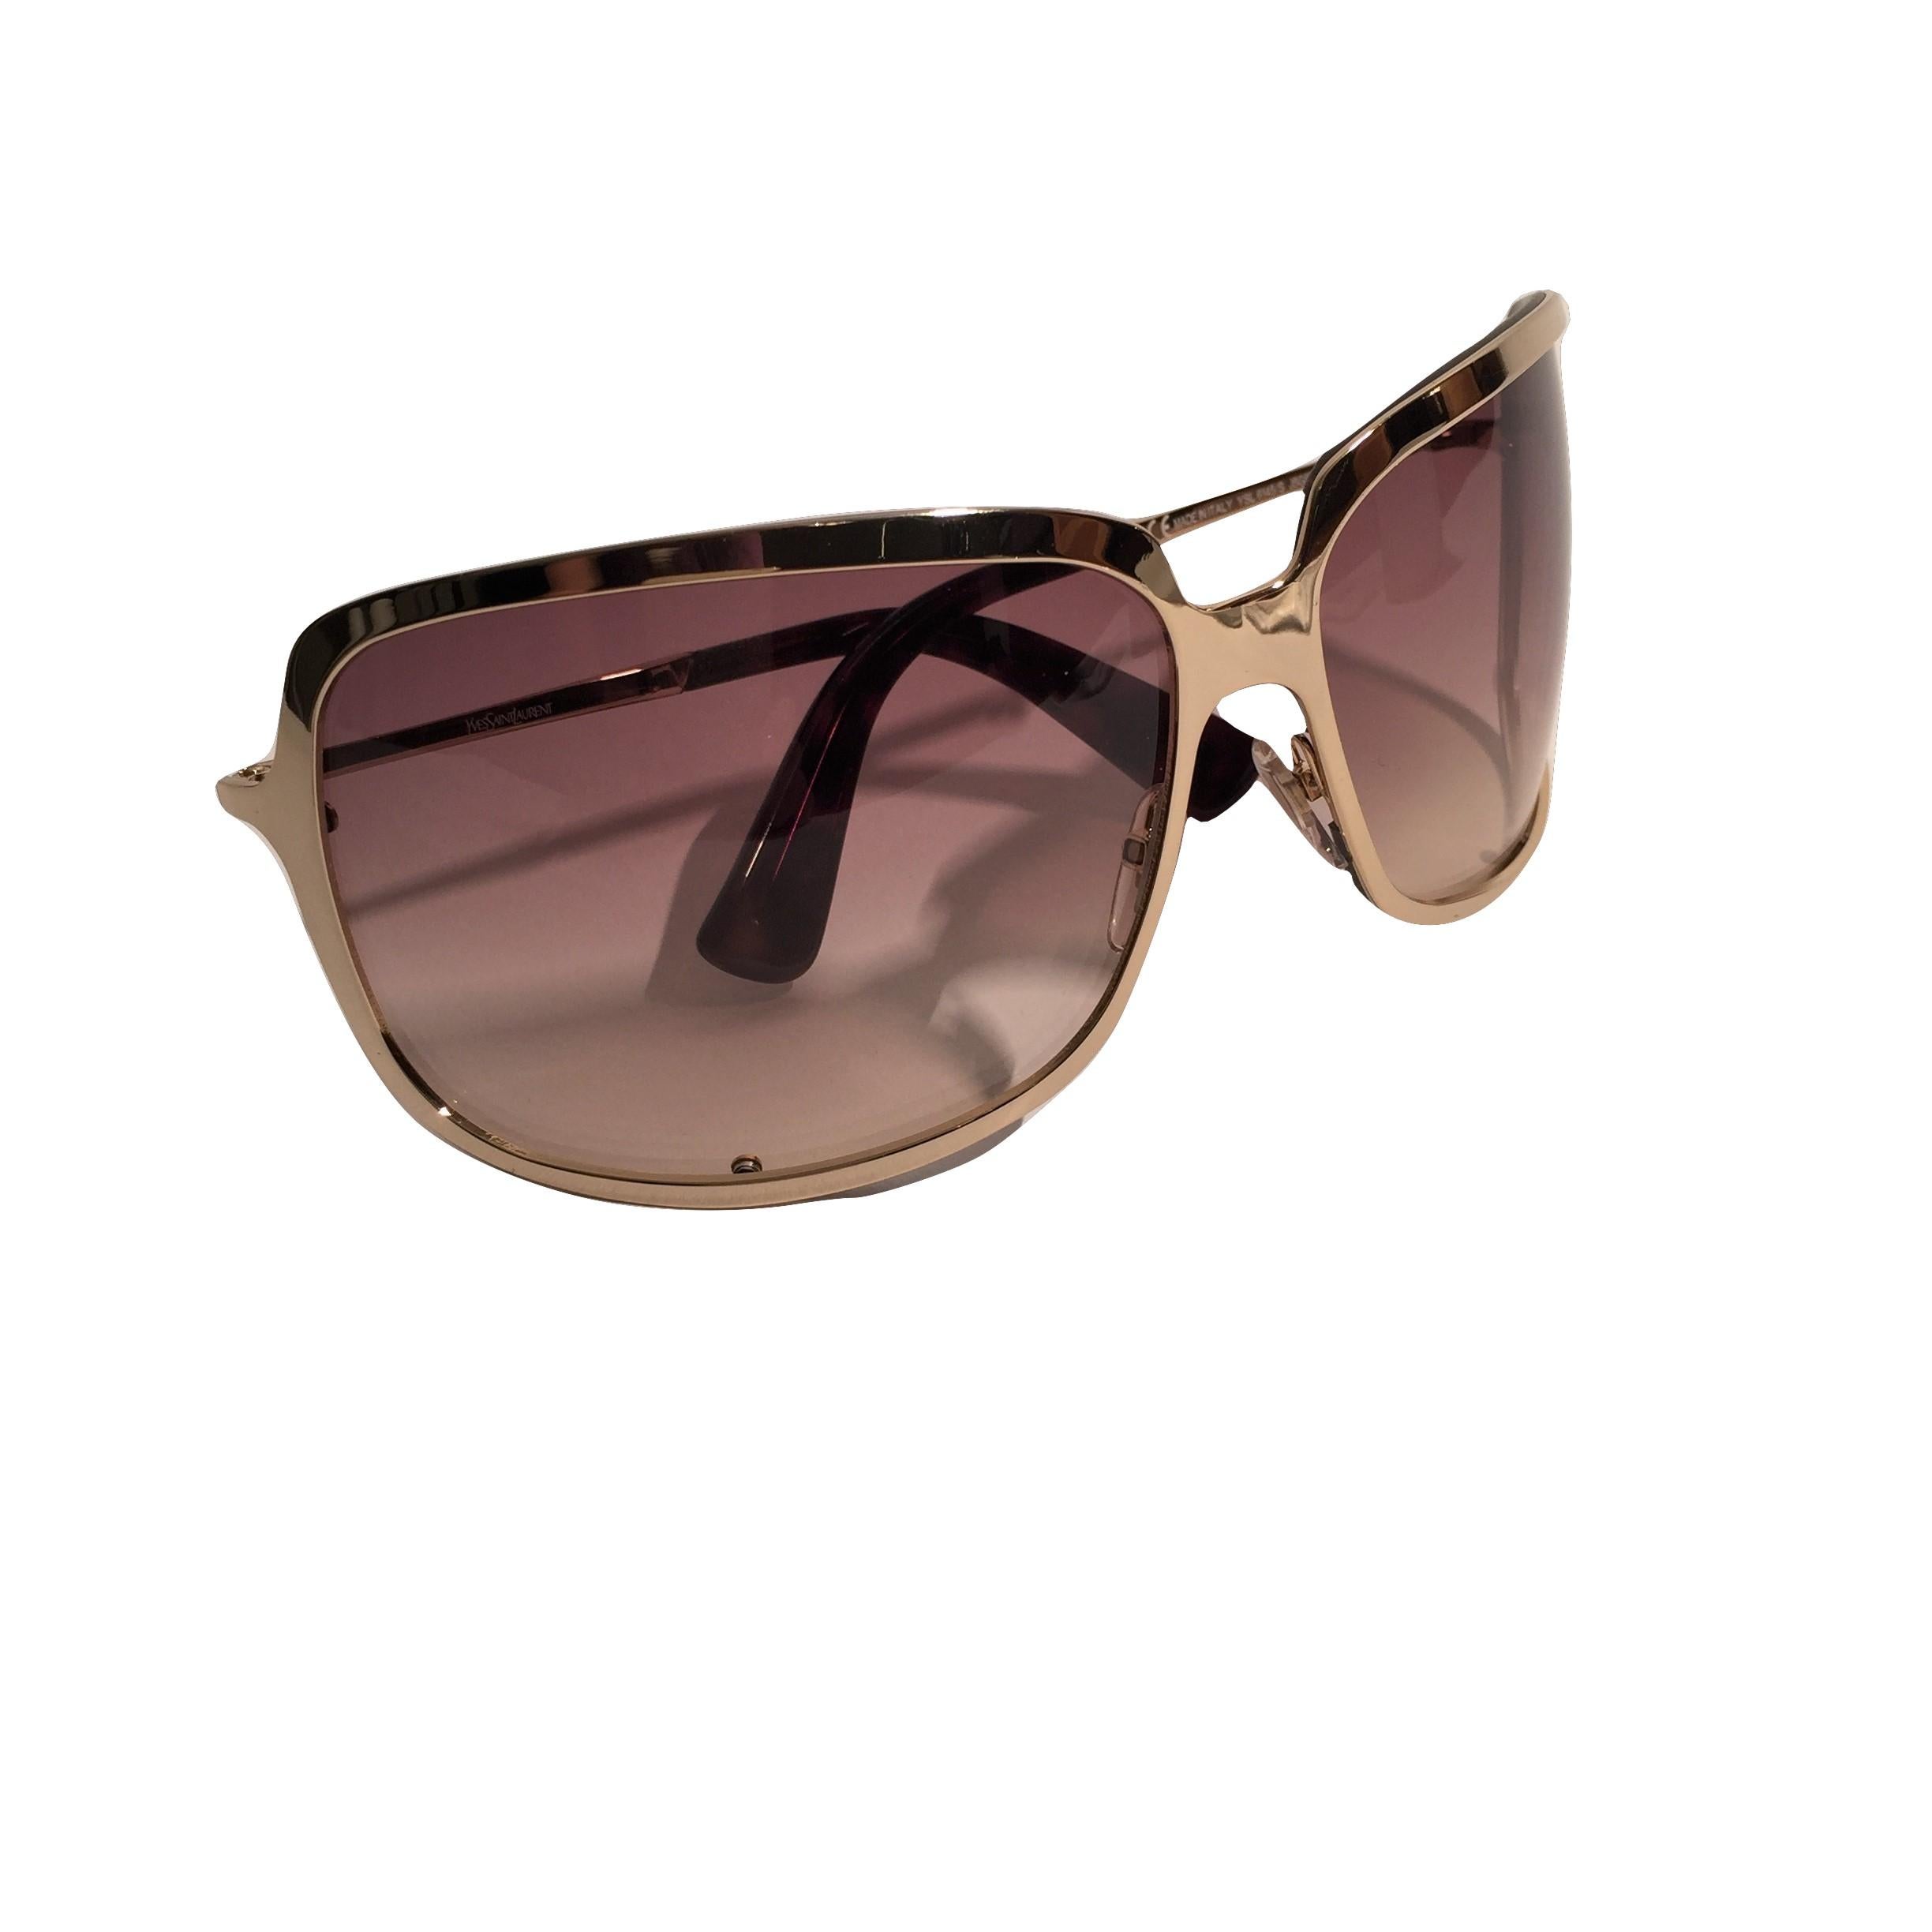 New Yves Saint Laurent YSL Gold Wrap Sunglasses W/ Case 7